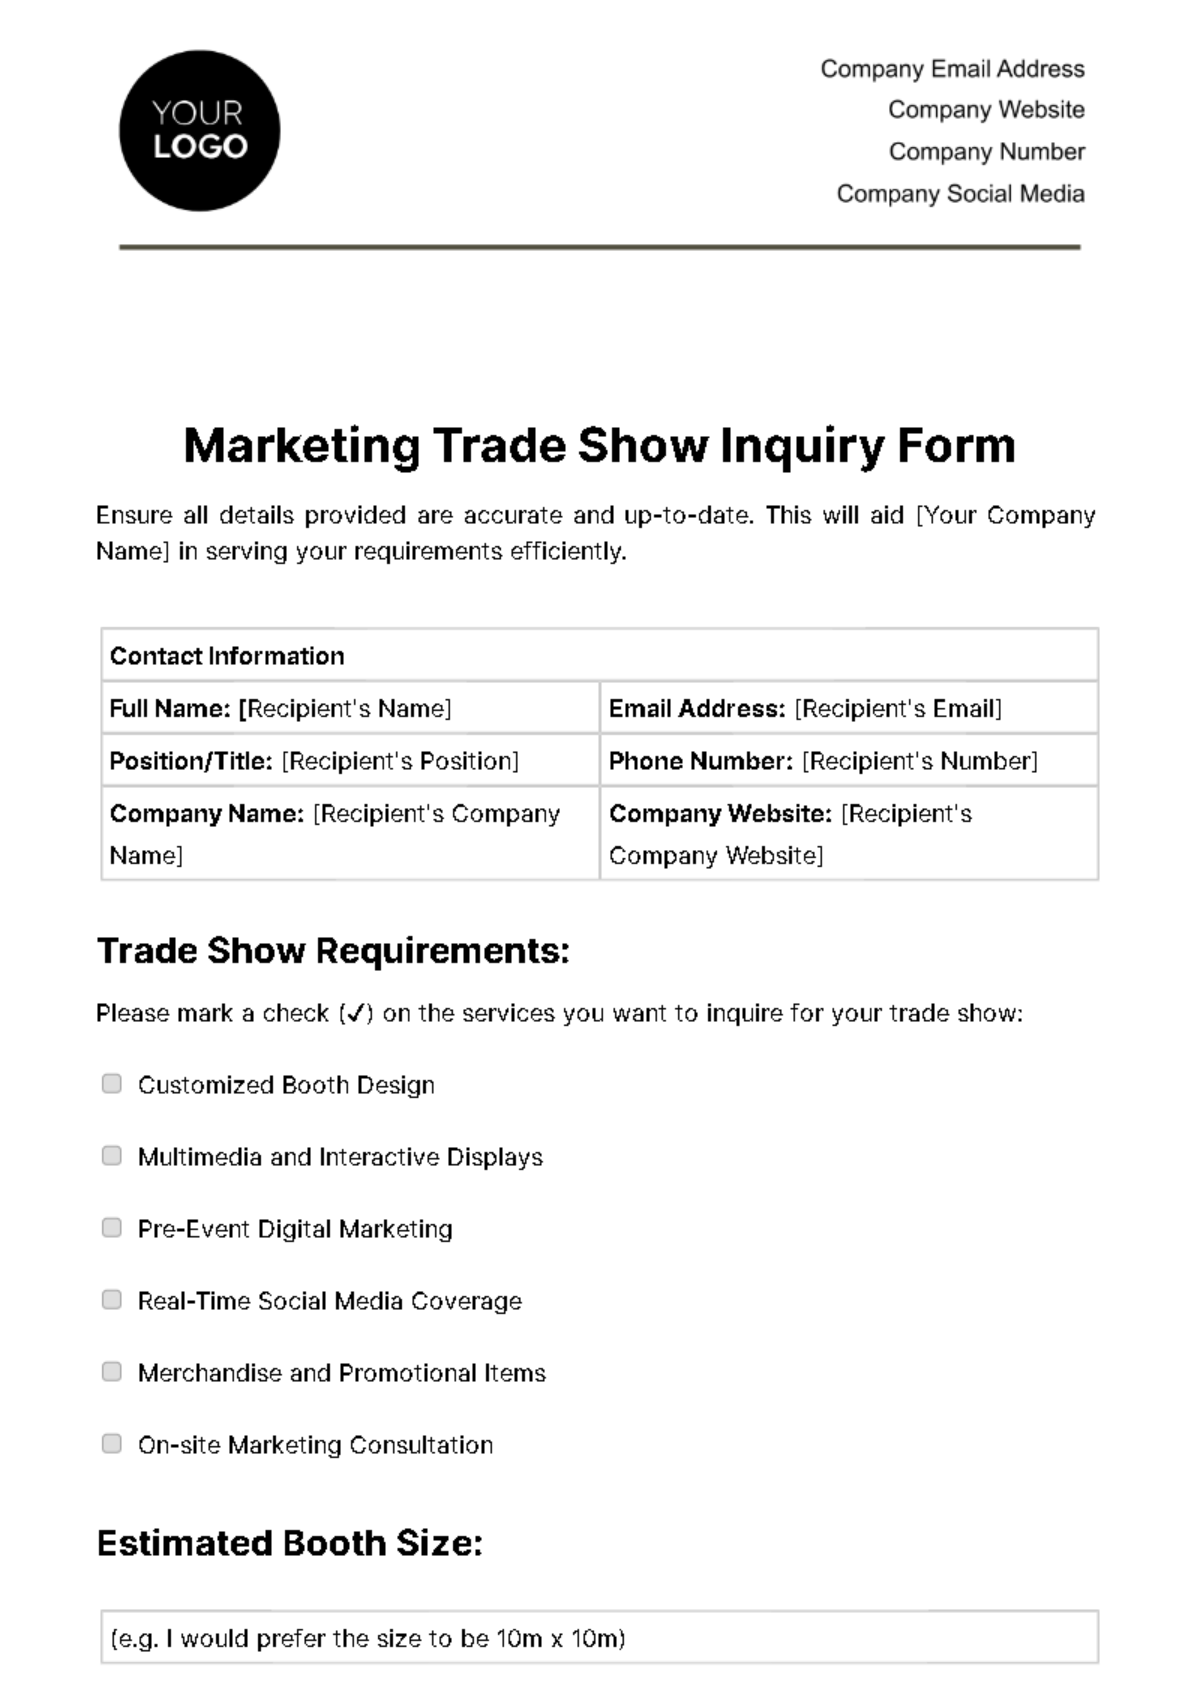 Marketing Trade Show Inquiry Form Template